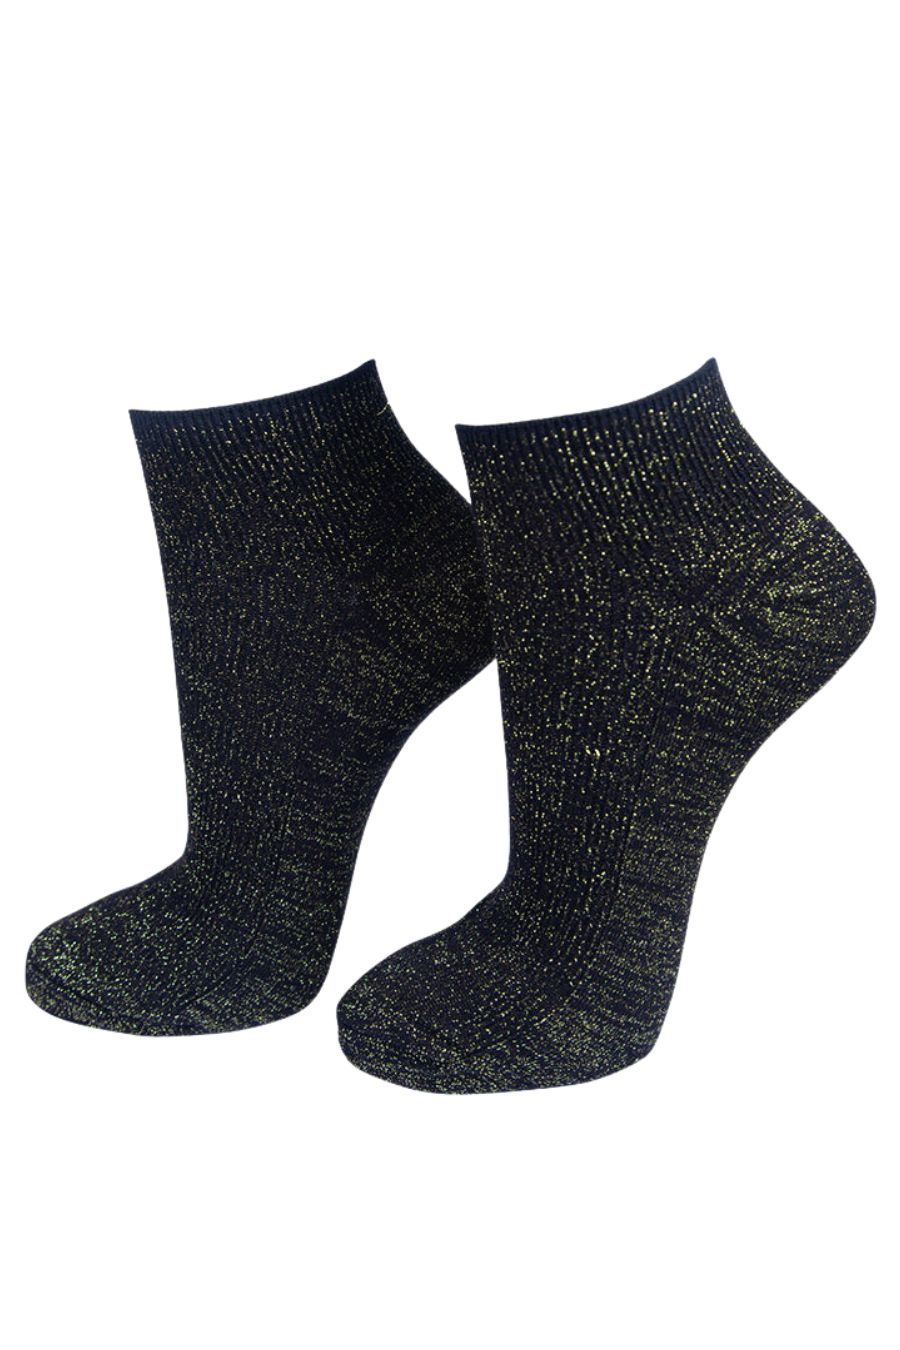 Black anklet trainer socks with an all over gold glitter shimmer